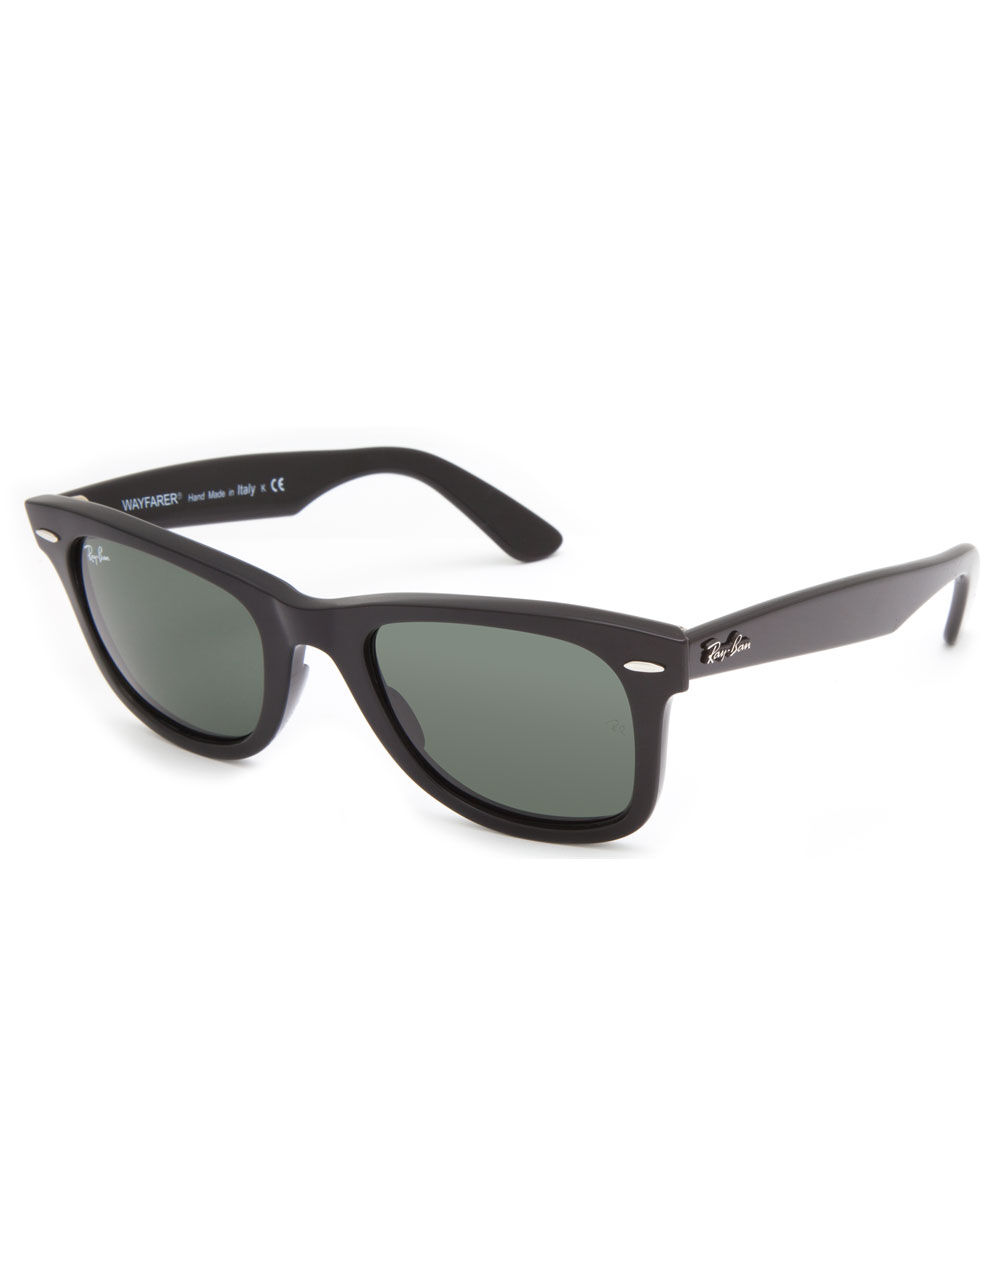 RAY-BAN Original Wayfarer Sunglasses